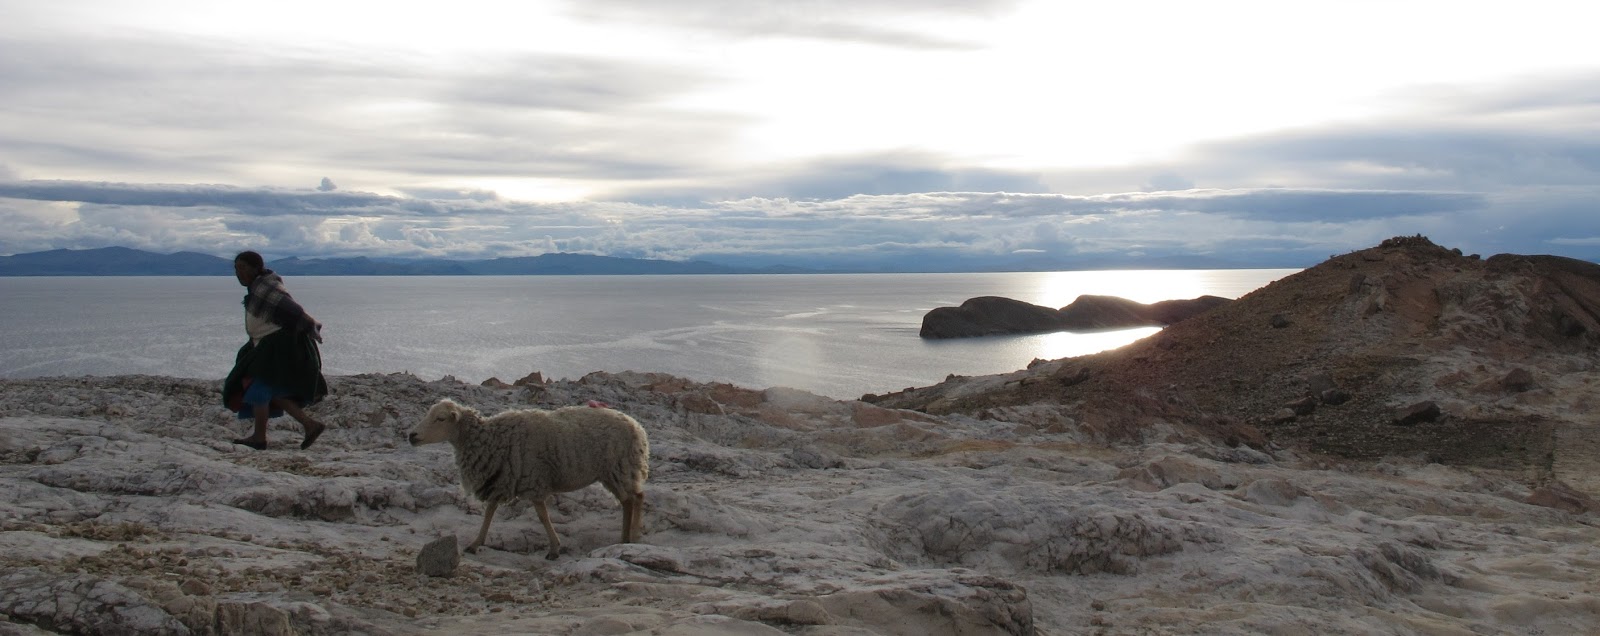 Shepherdess Lake Titicaca